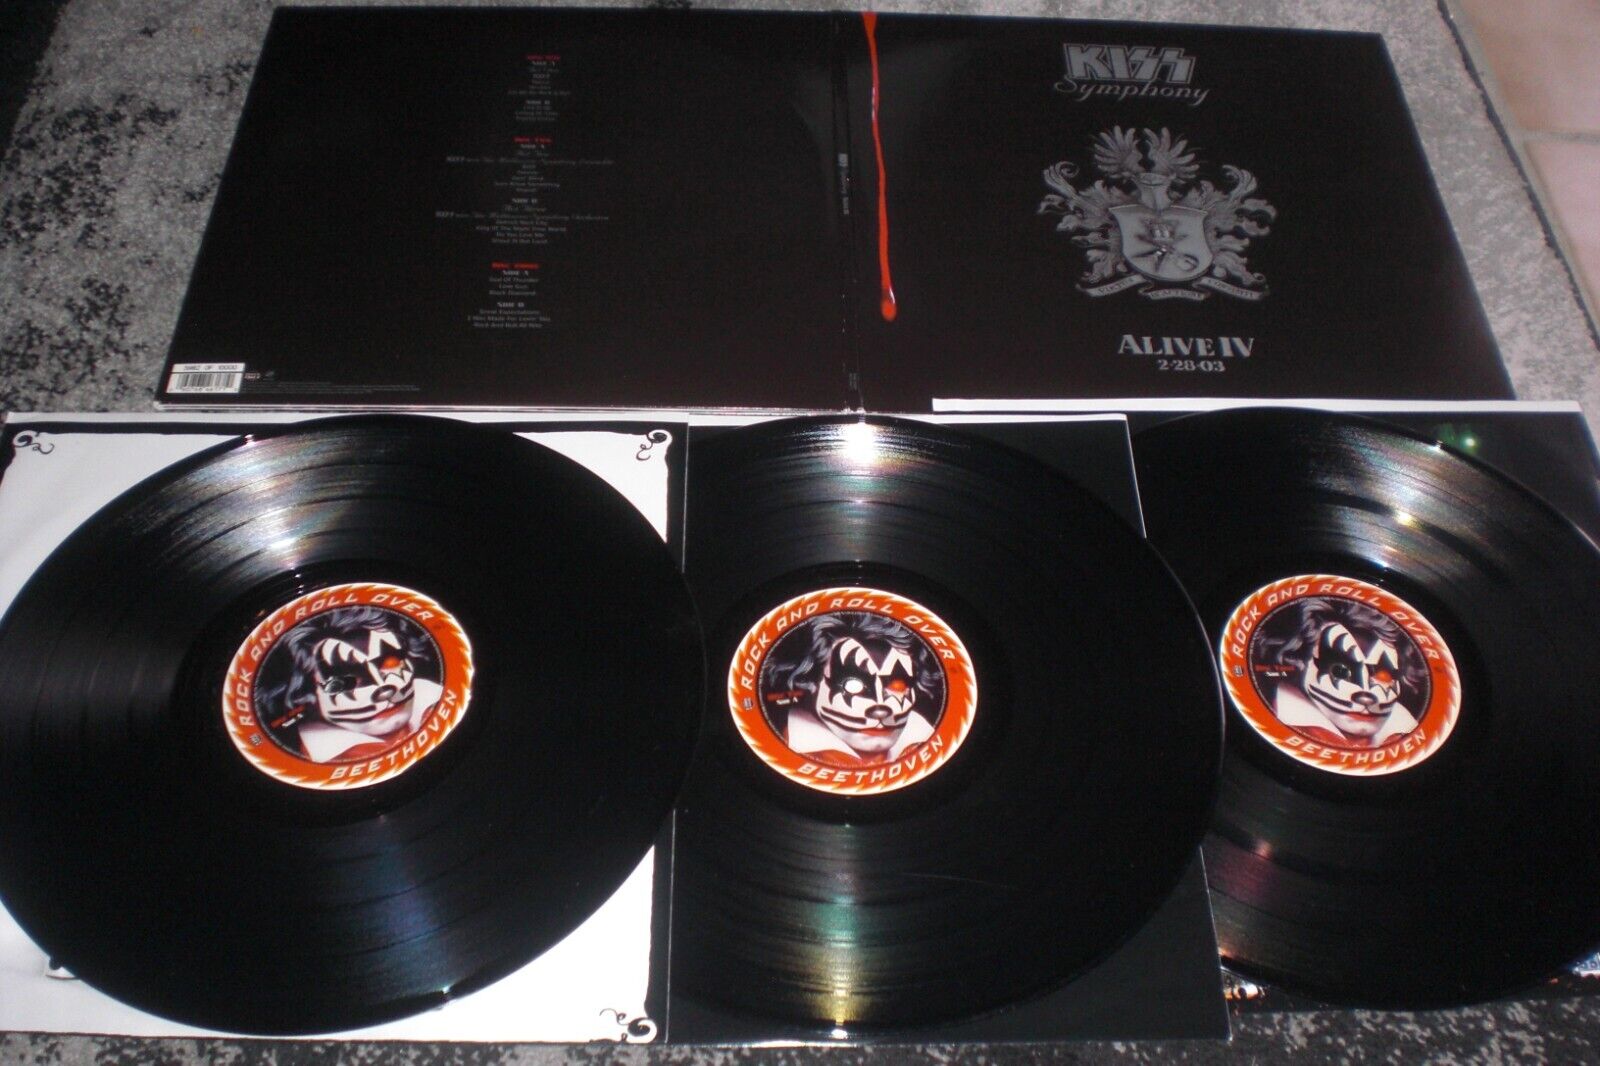 Kiss - Symphony Alive IV 3 Lp Set